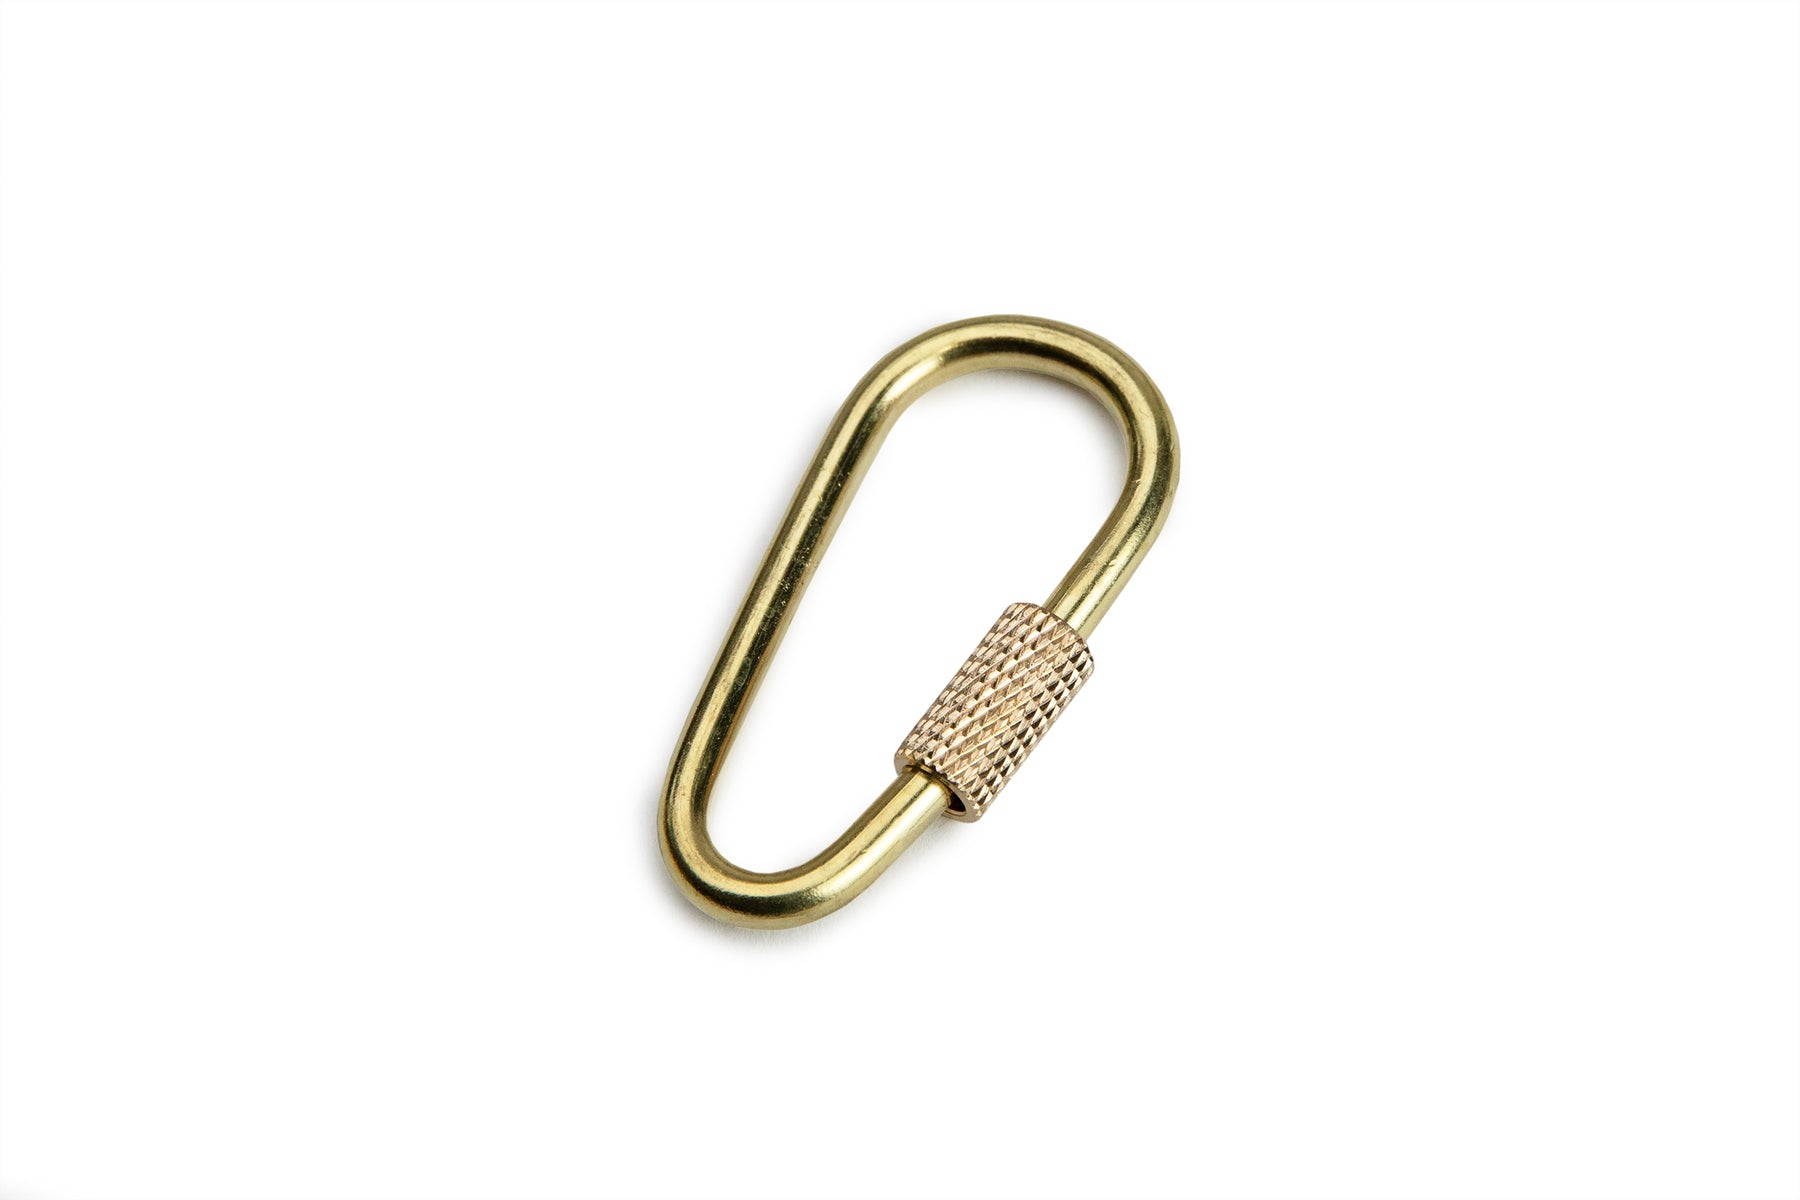 Orion - Twist Lock Carabiner - (Solid Brass)